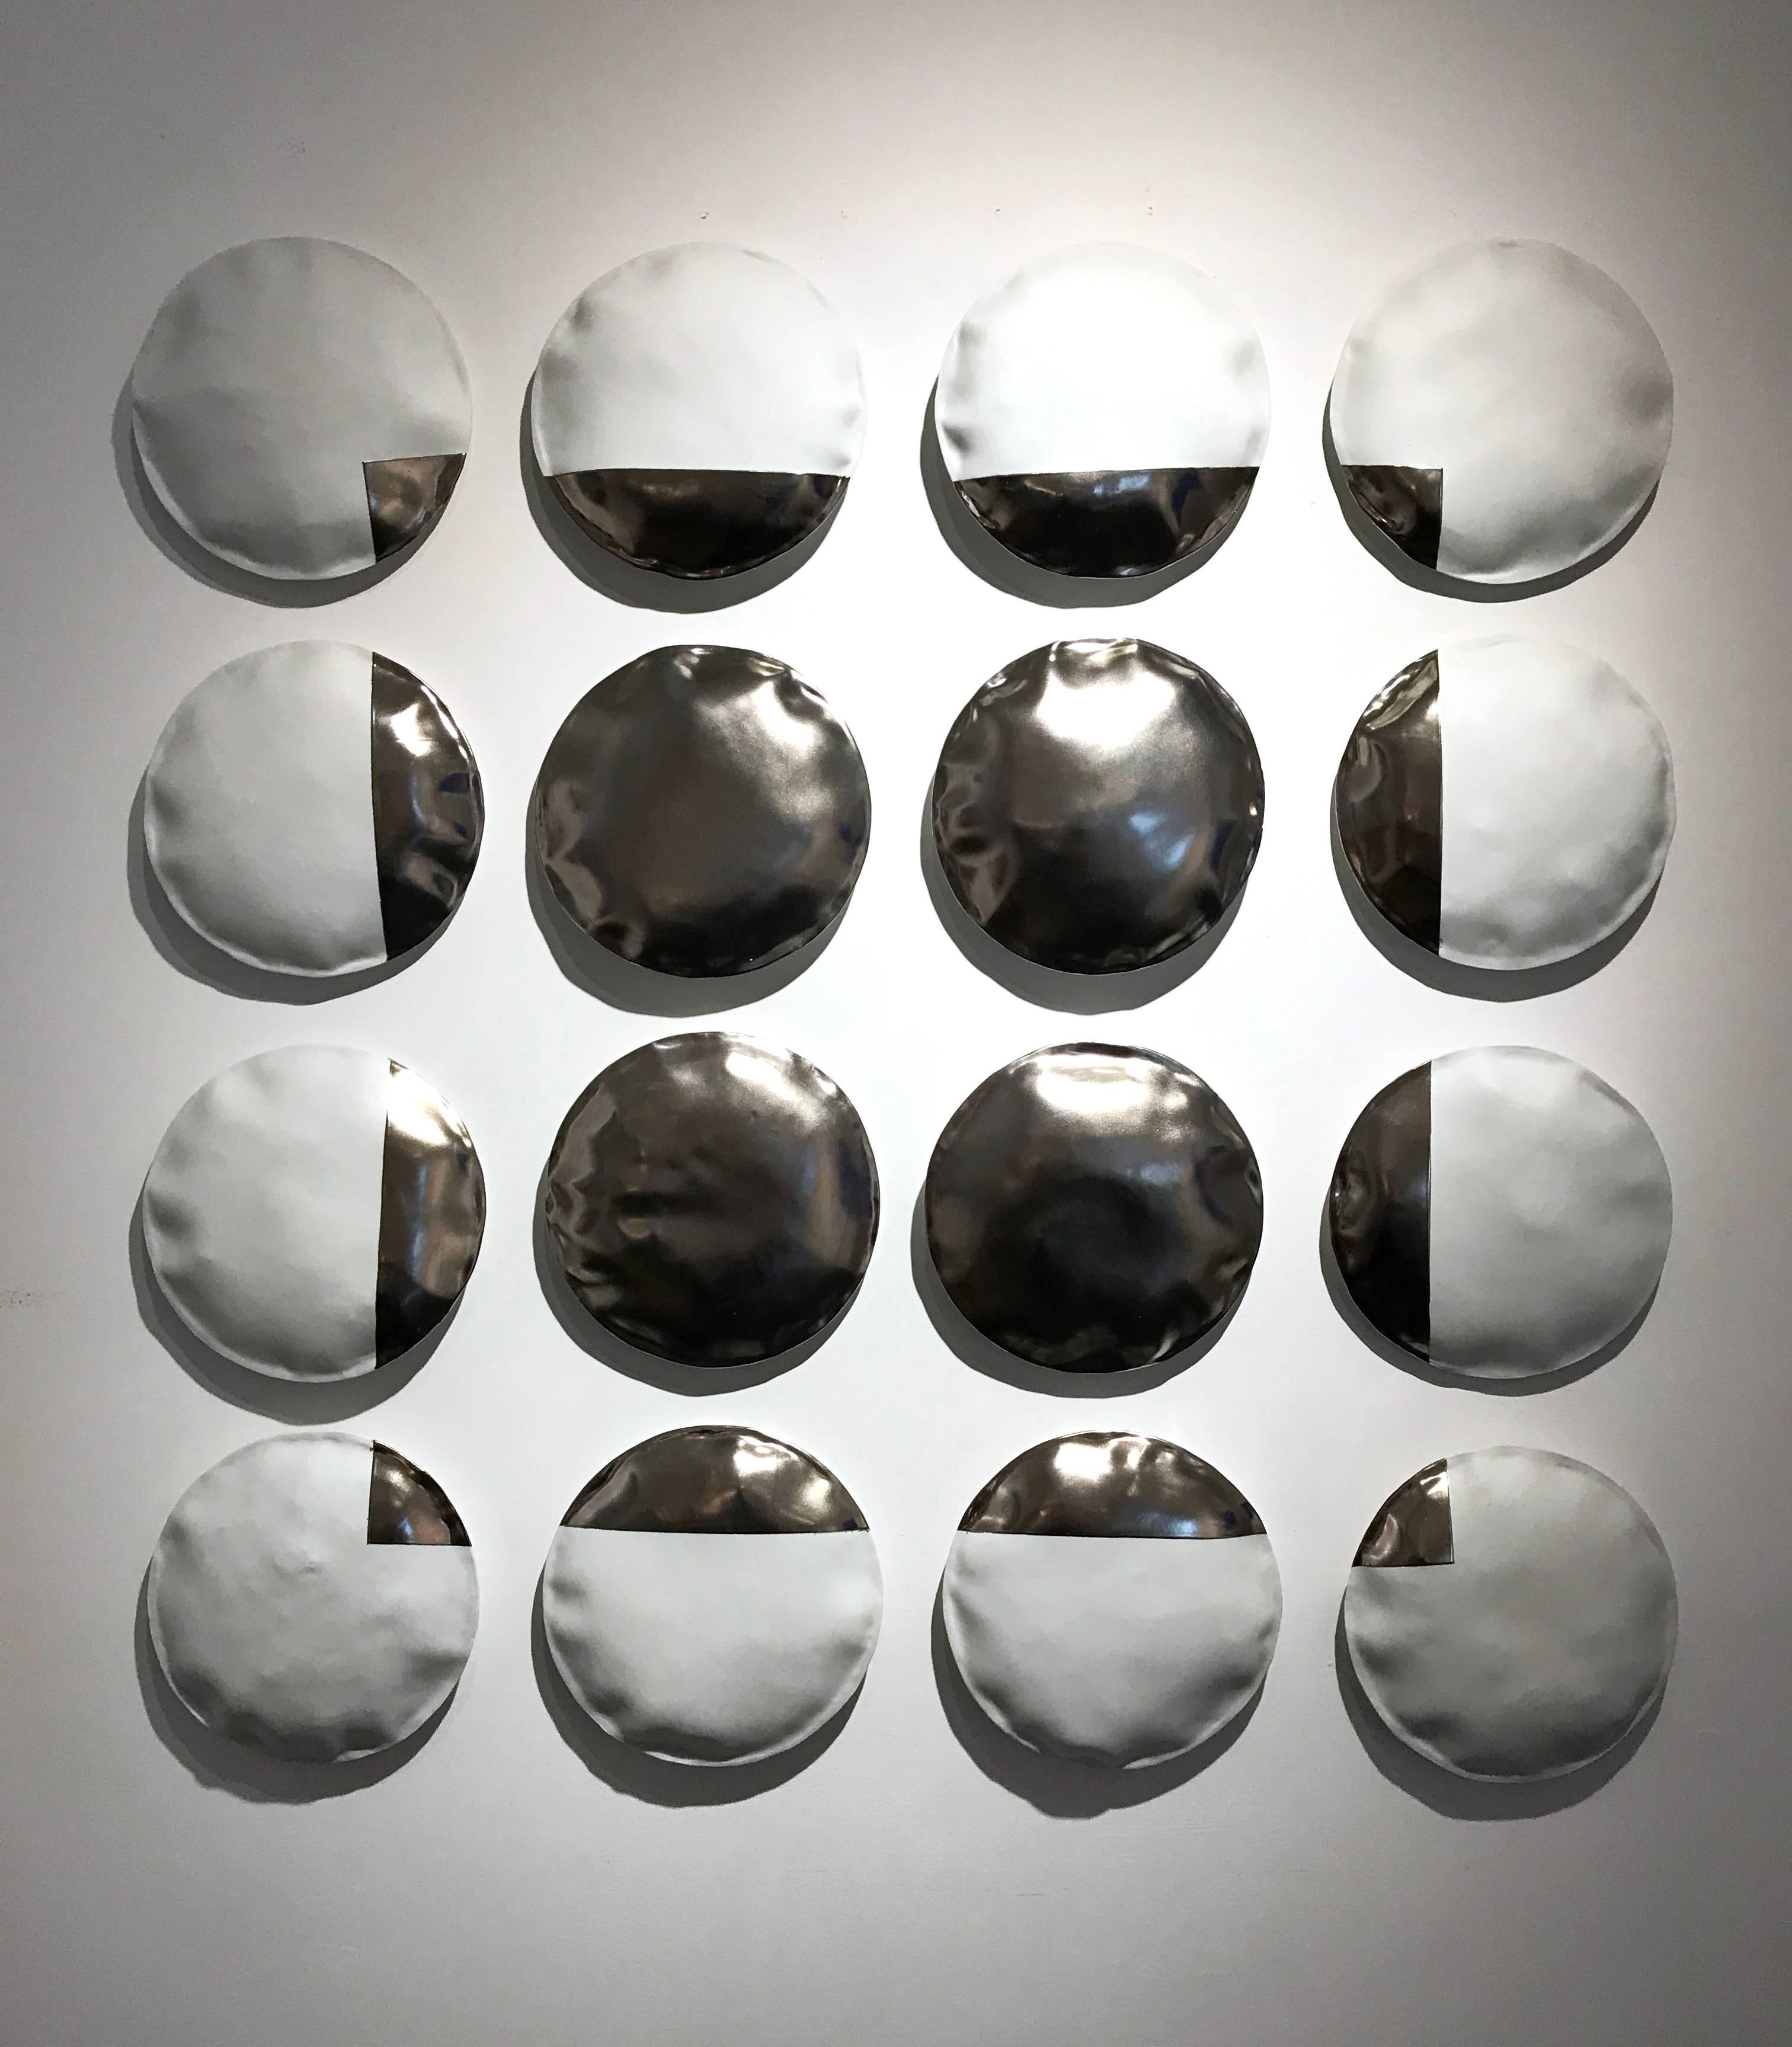 Stepanka Horalkova Abstract Sculpture - White and Silver Porcelaine Pillows, Mural Installation, Horizon